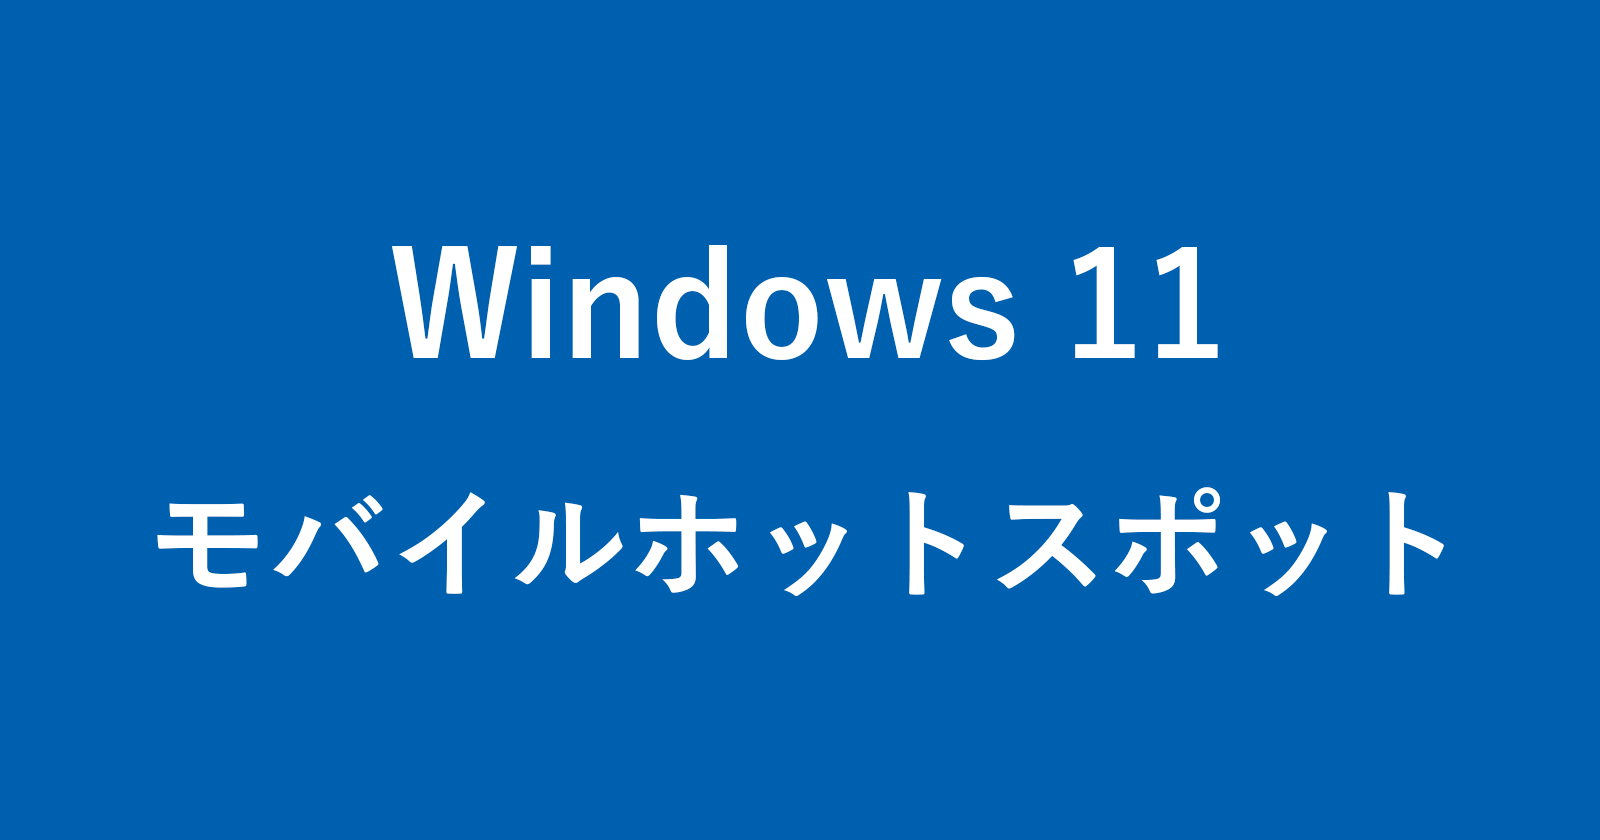 windows 11 mobile hotspot